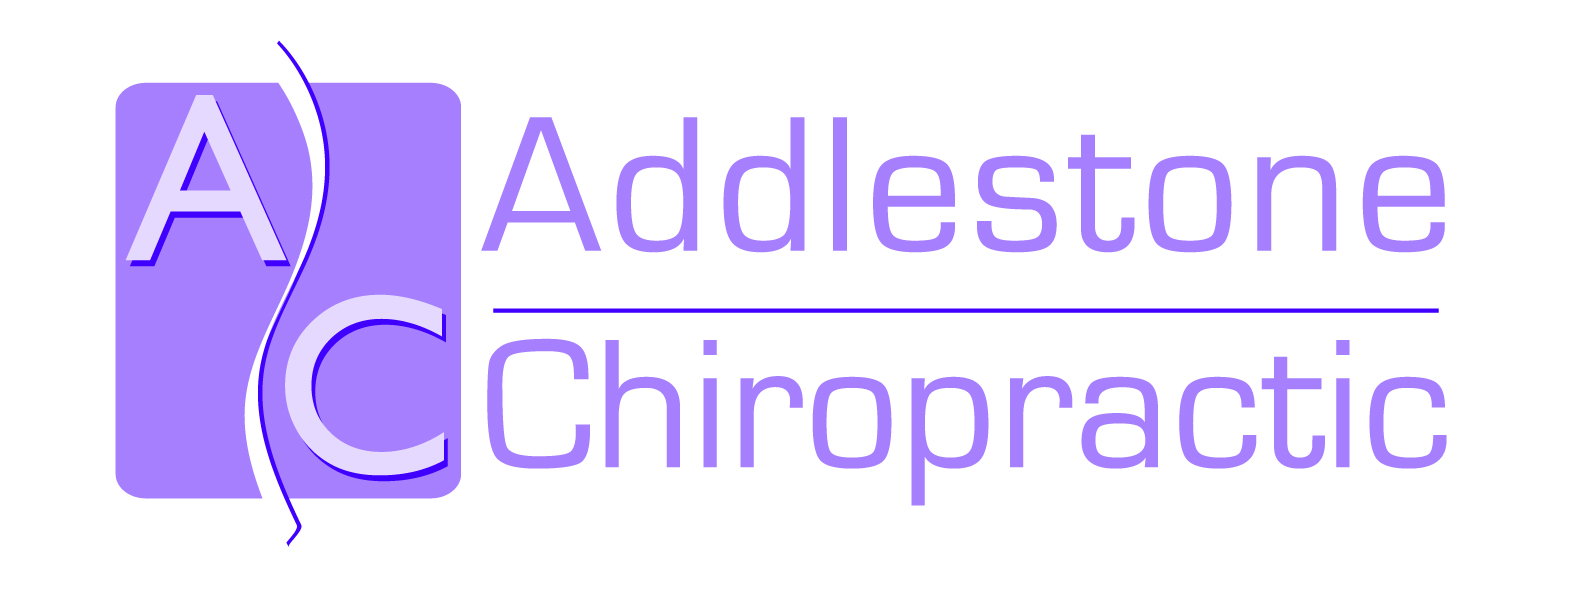 Addlestone Chiropractic